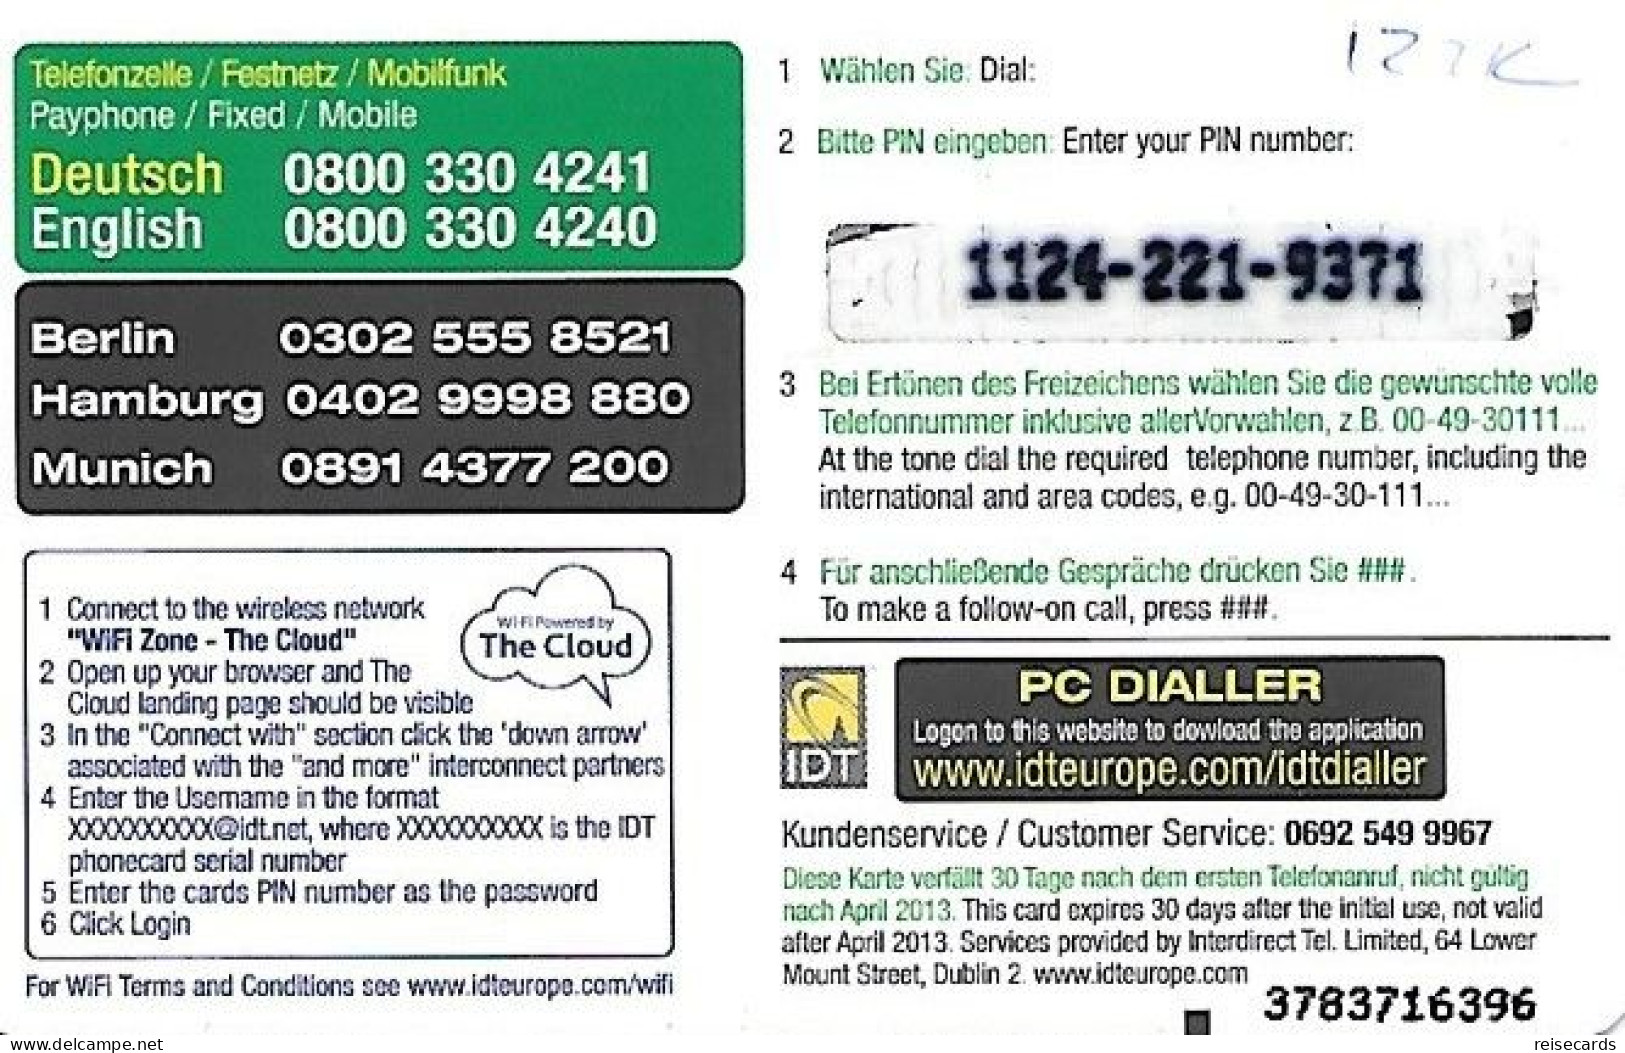 Germany: Prepaid IDT Top Card 04.13 - [2] Móviles Tarjetas Prepagadas & Recargos